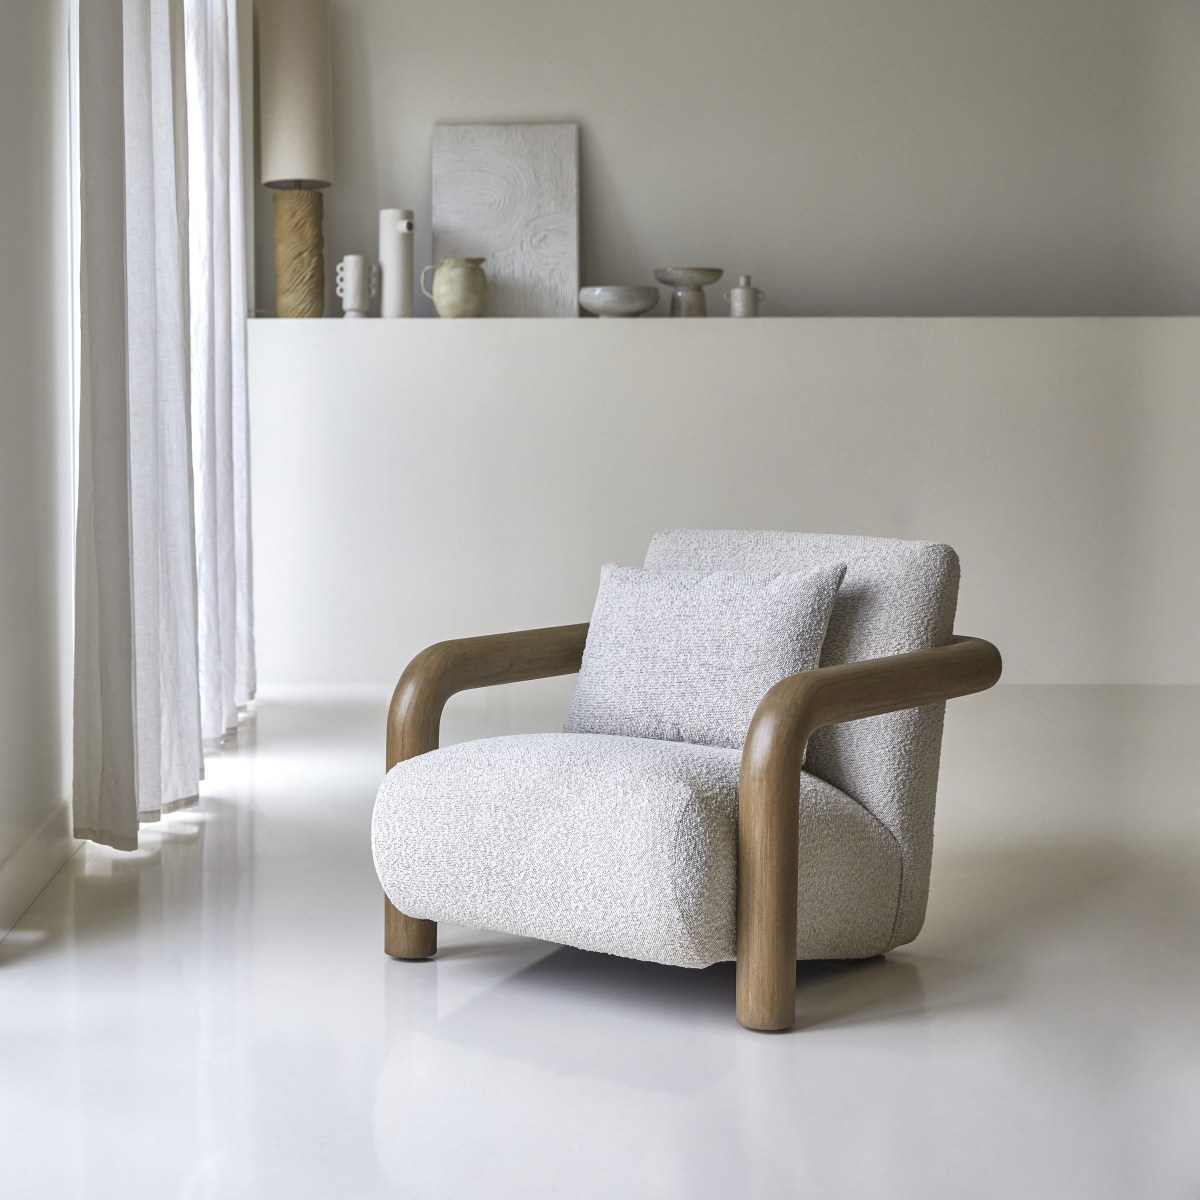 Nina - Niedriger Sessel aus massivem Mindiholz und ecrufarbenem Stoff